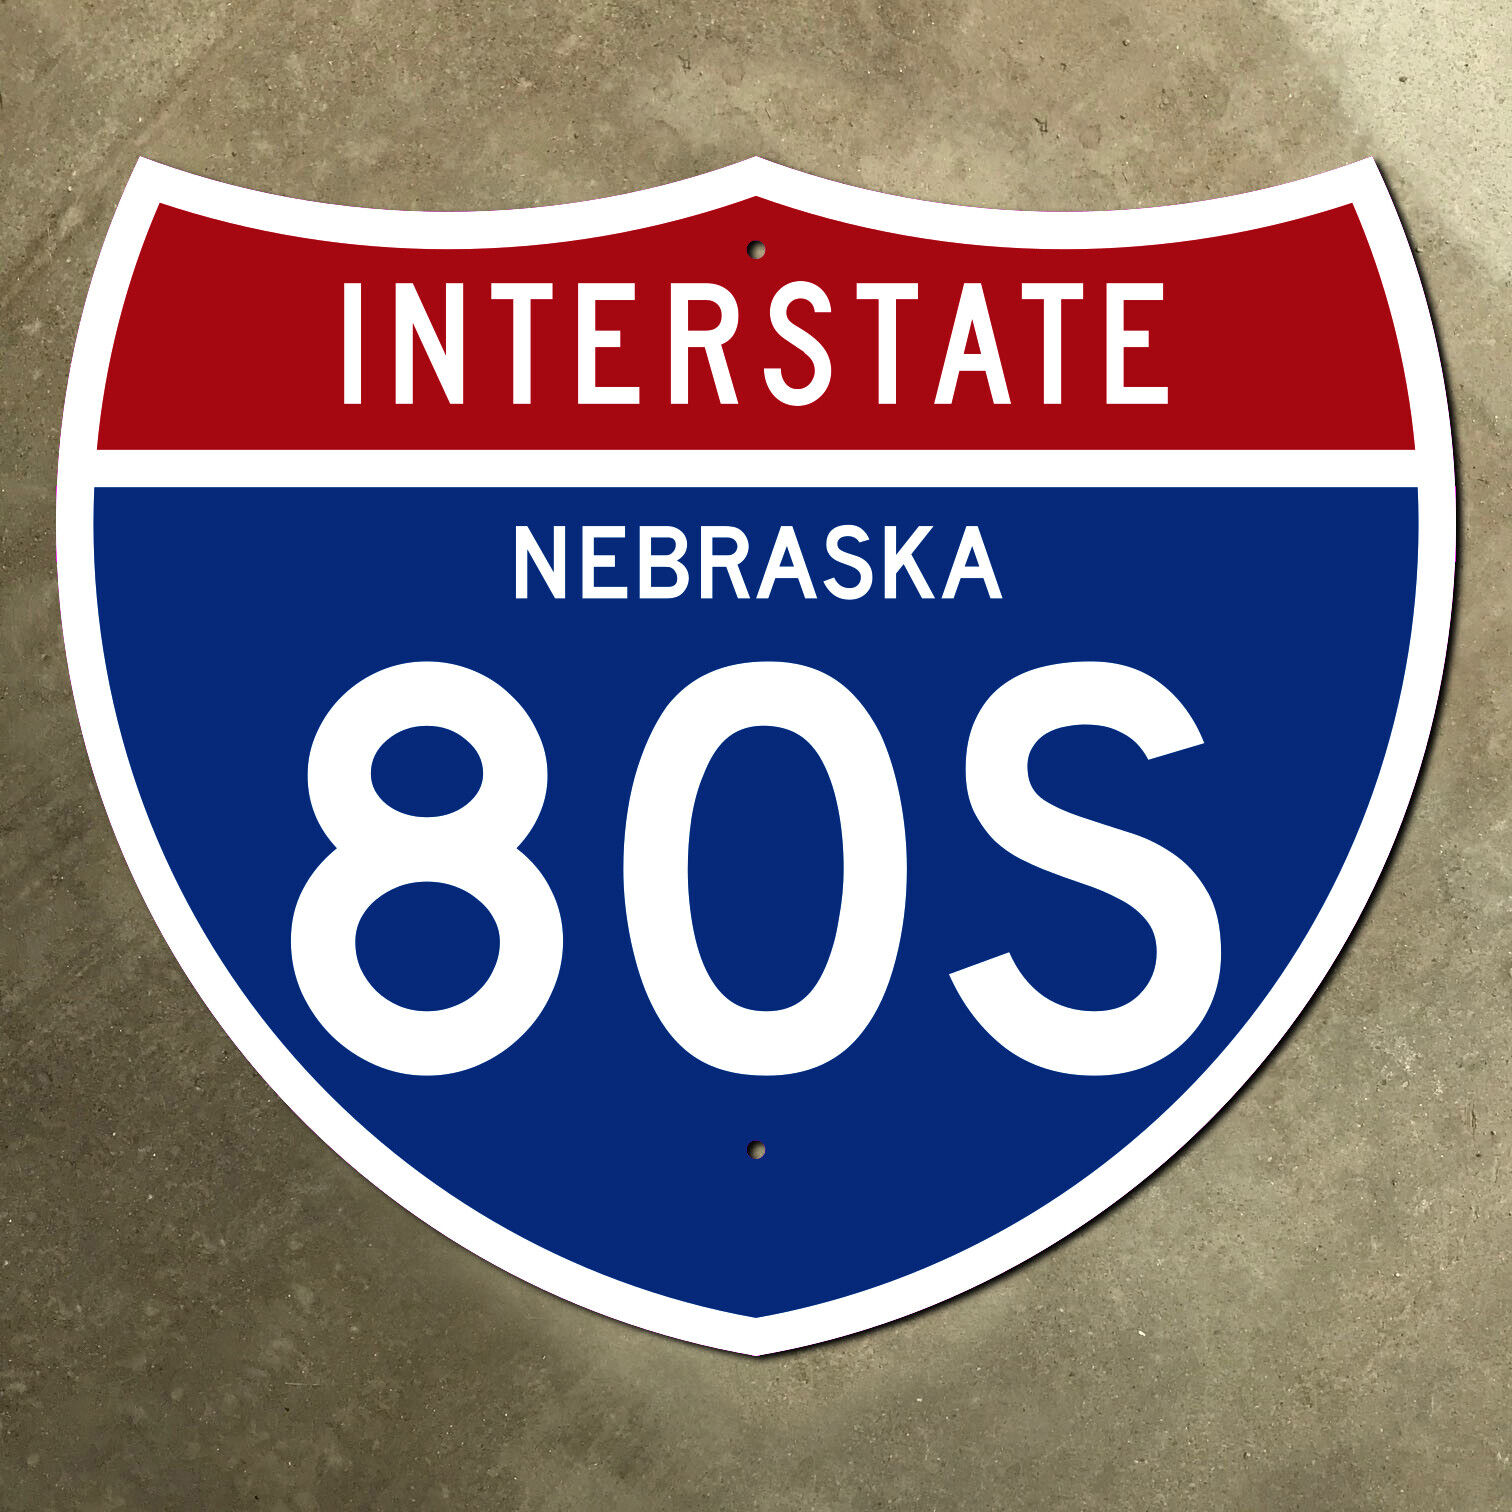 Nebraska interstate route 80S highway marker road sign 21x18 1961